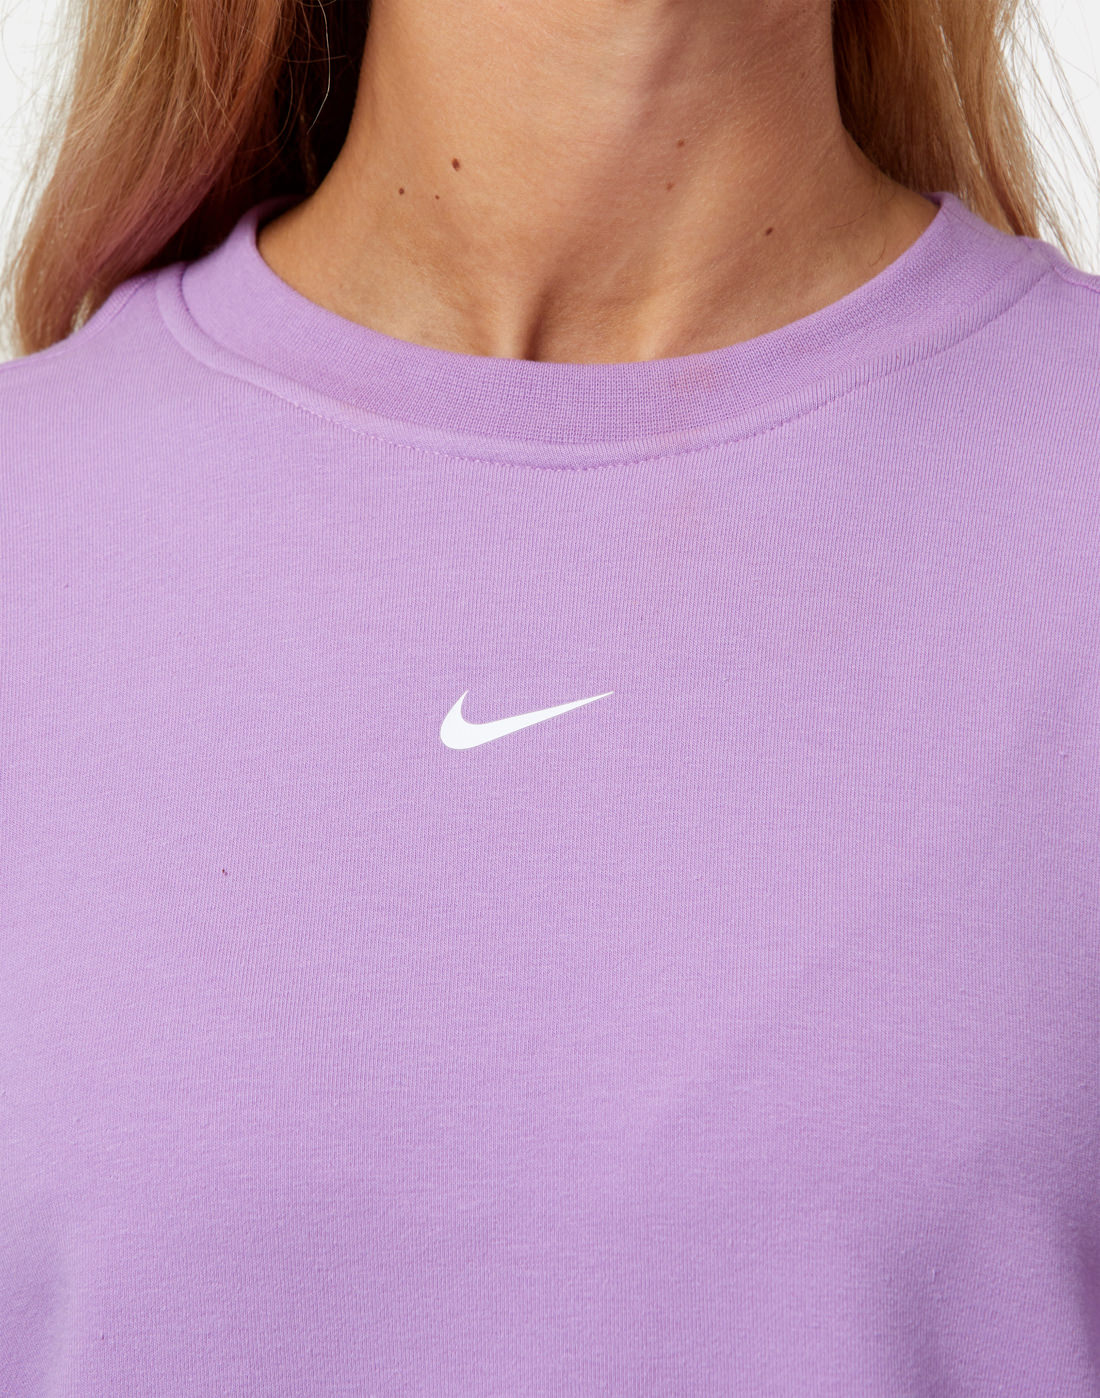 Nike Womens One Crew Neck Sweatshirt - Pink | Life Style Sports IE